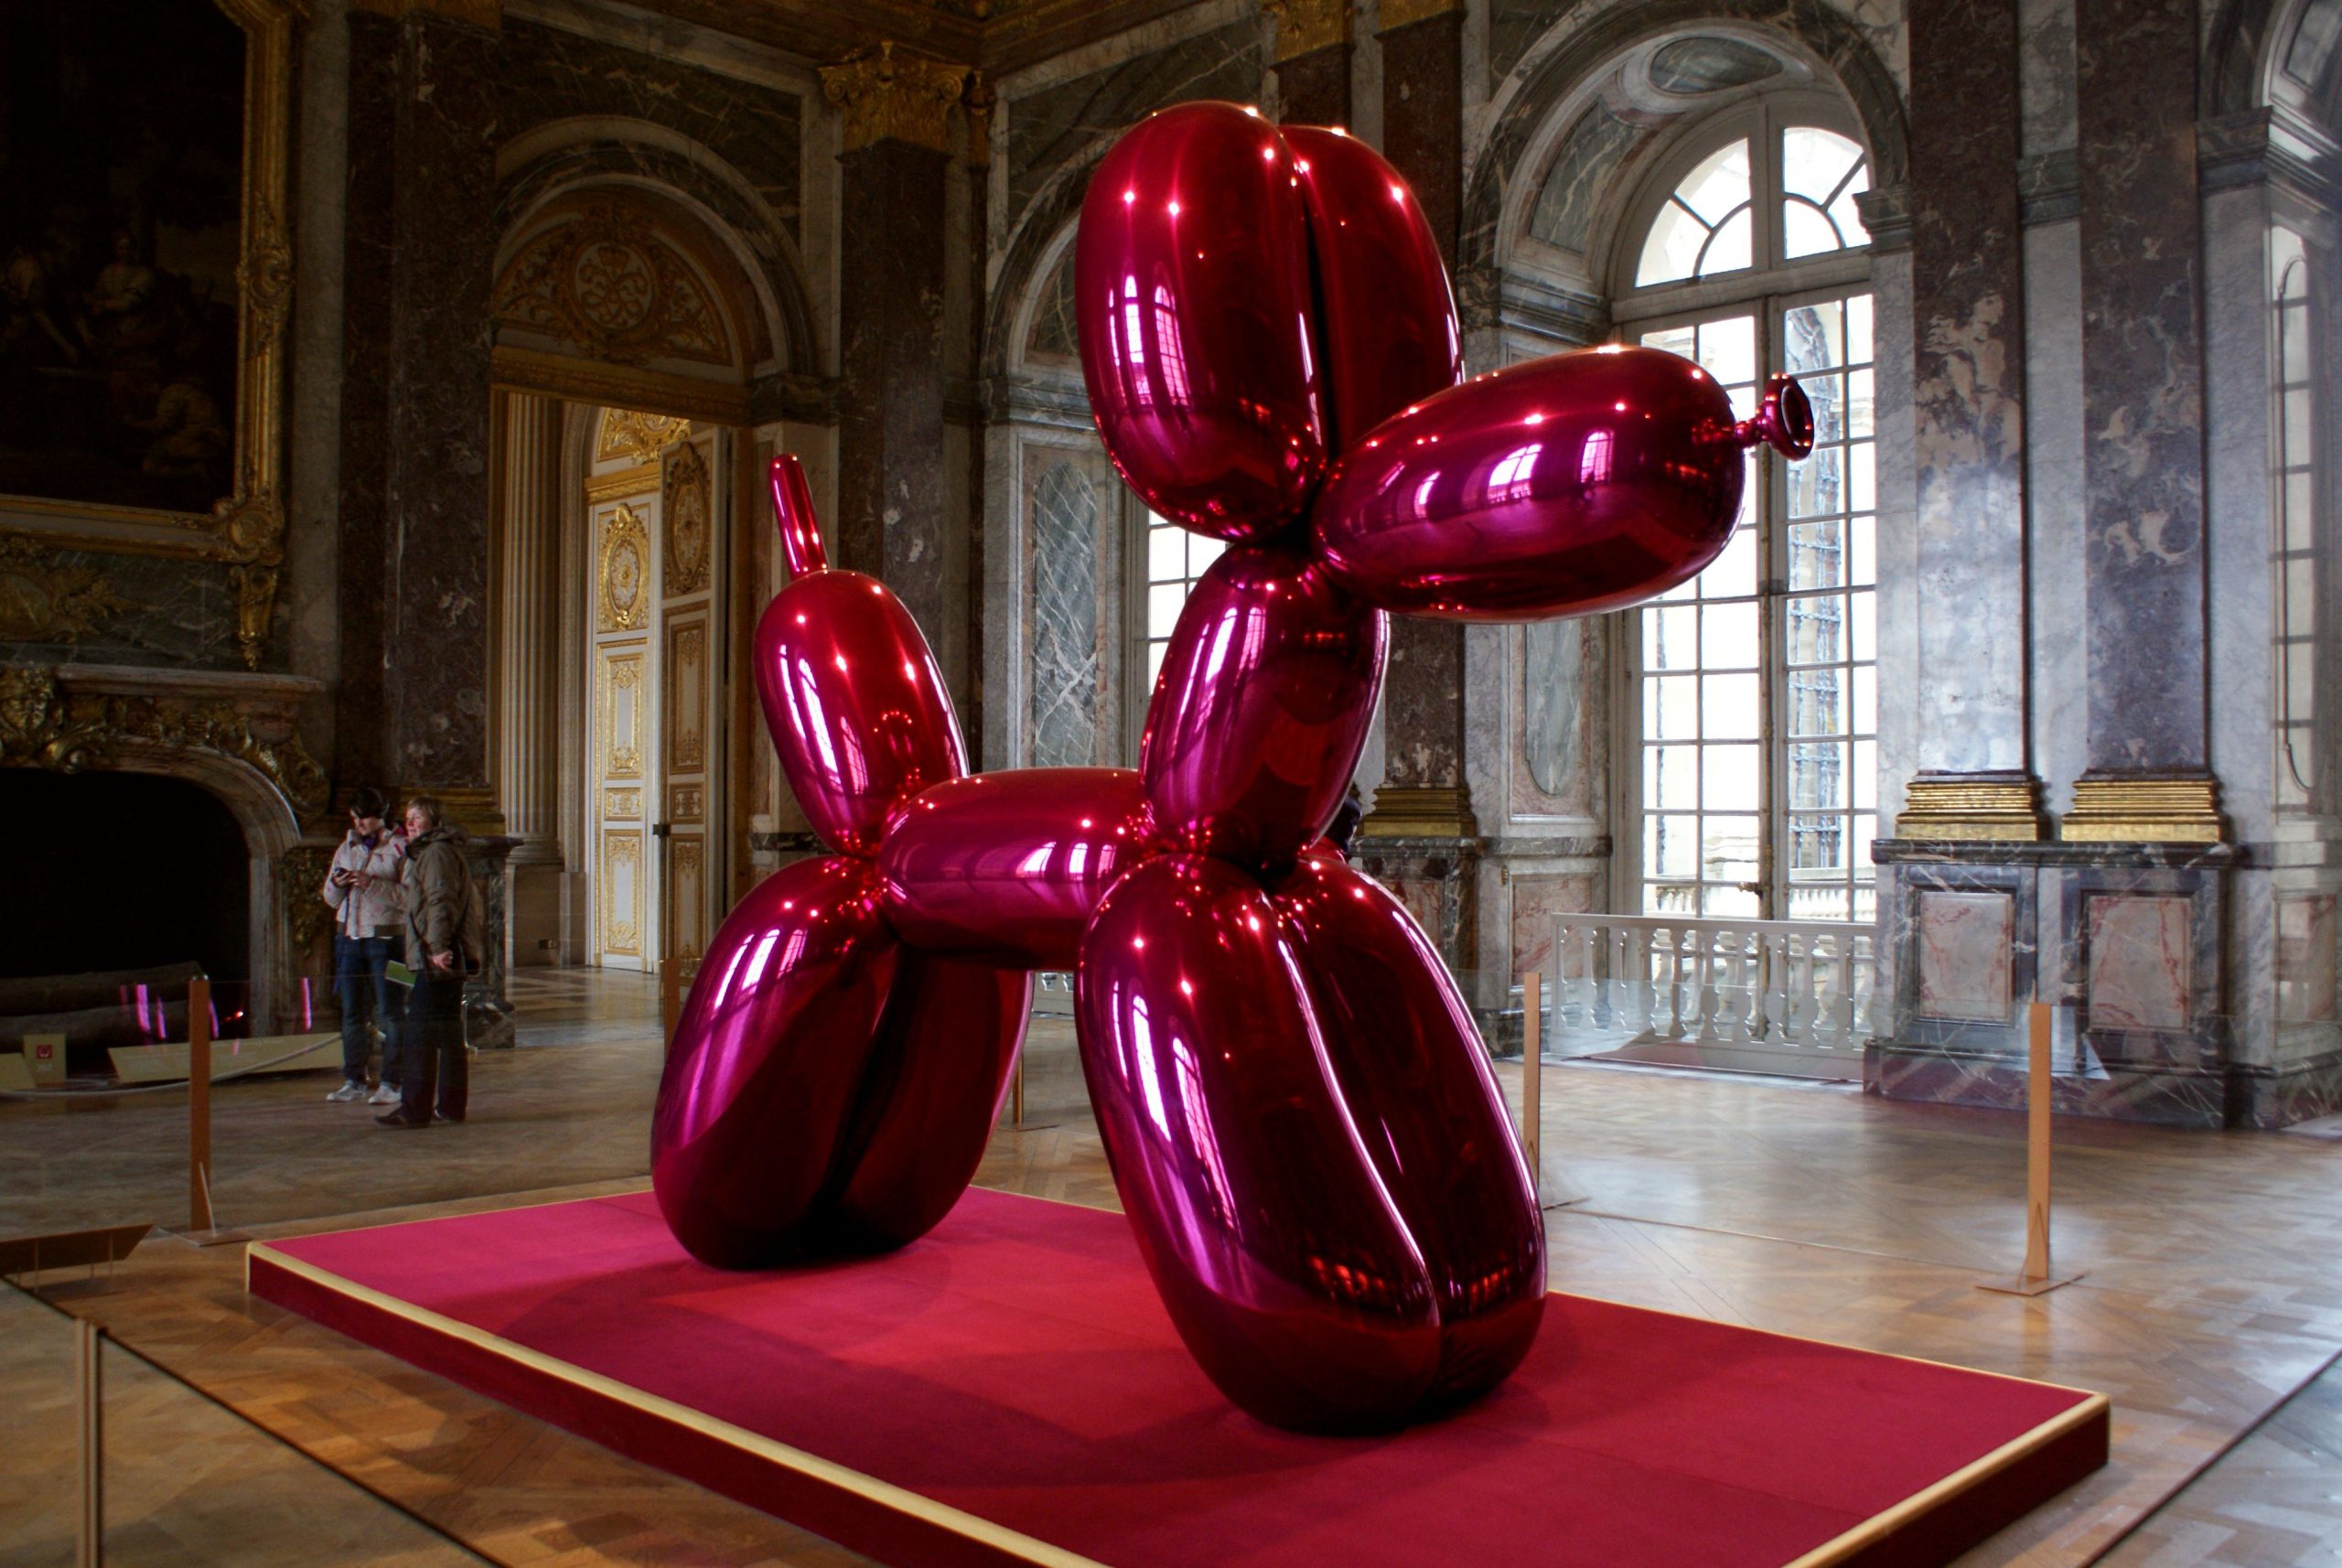 Exploring Jeff Koons' Art: Balloon Dogs and Beyond